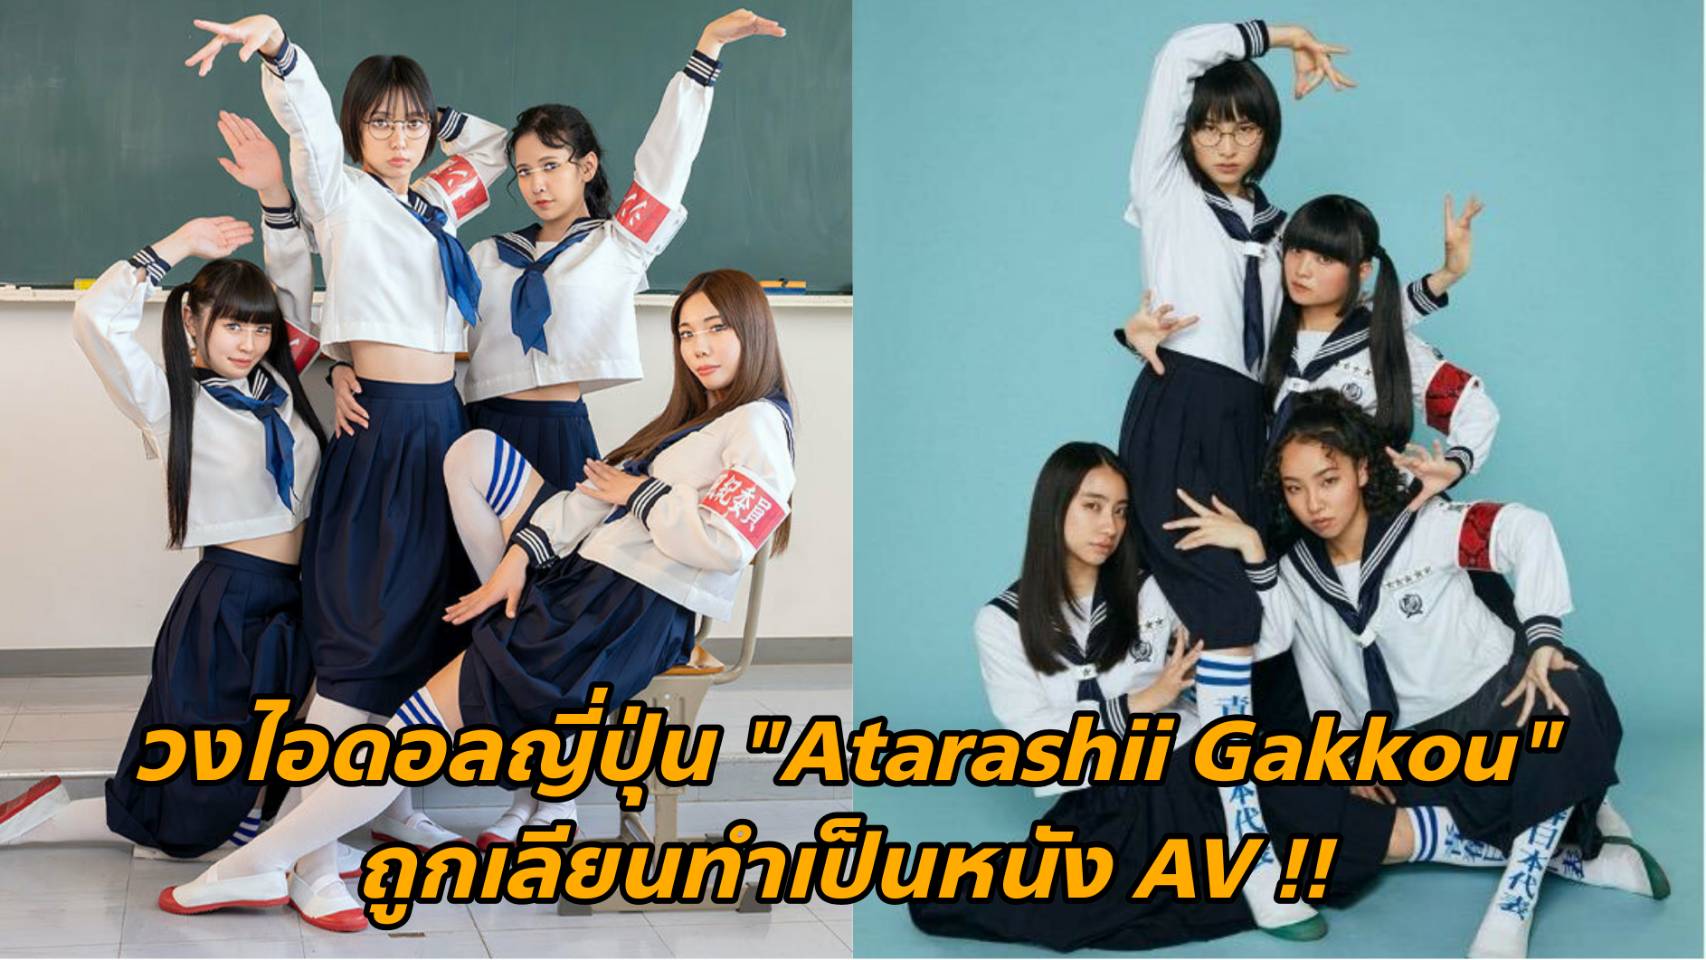 [HUNTC-006] วงไอดอลญี่ปุ่น "Atarashii Gakkou" ถูกเลียนทำเป็นหนัง AV 3